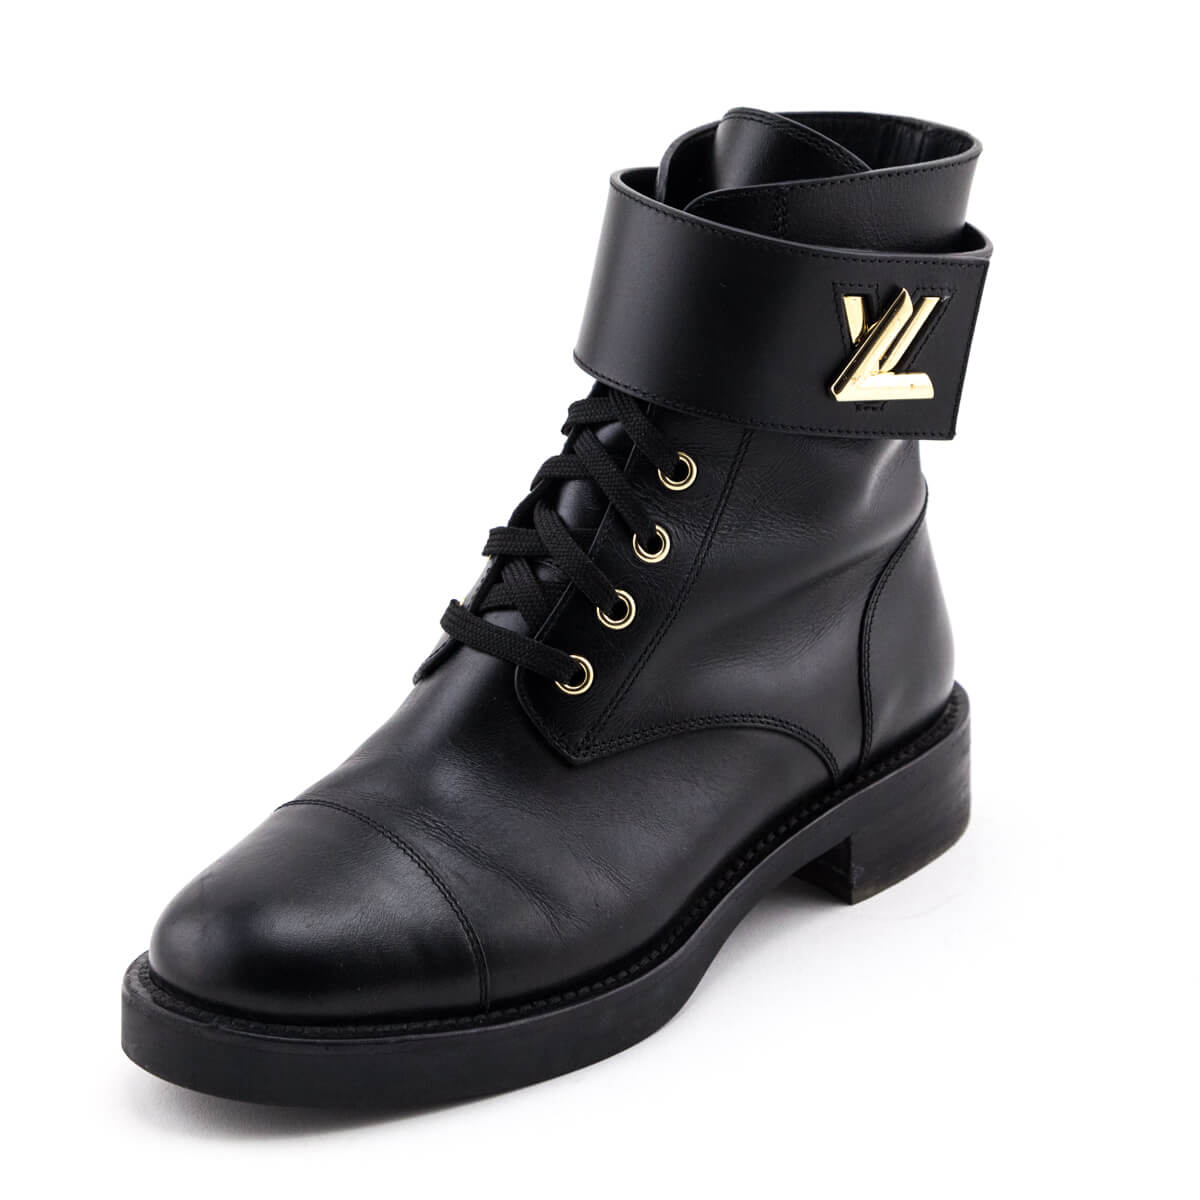 Wonderland leather ankle boots Louis Vuitton Black size 38 EU in